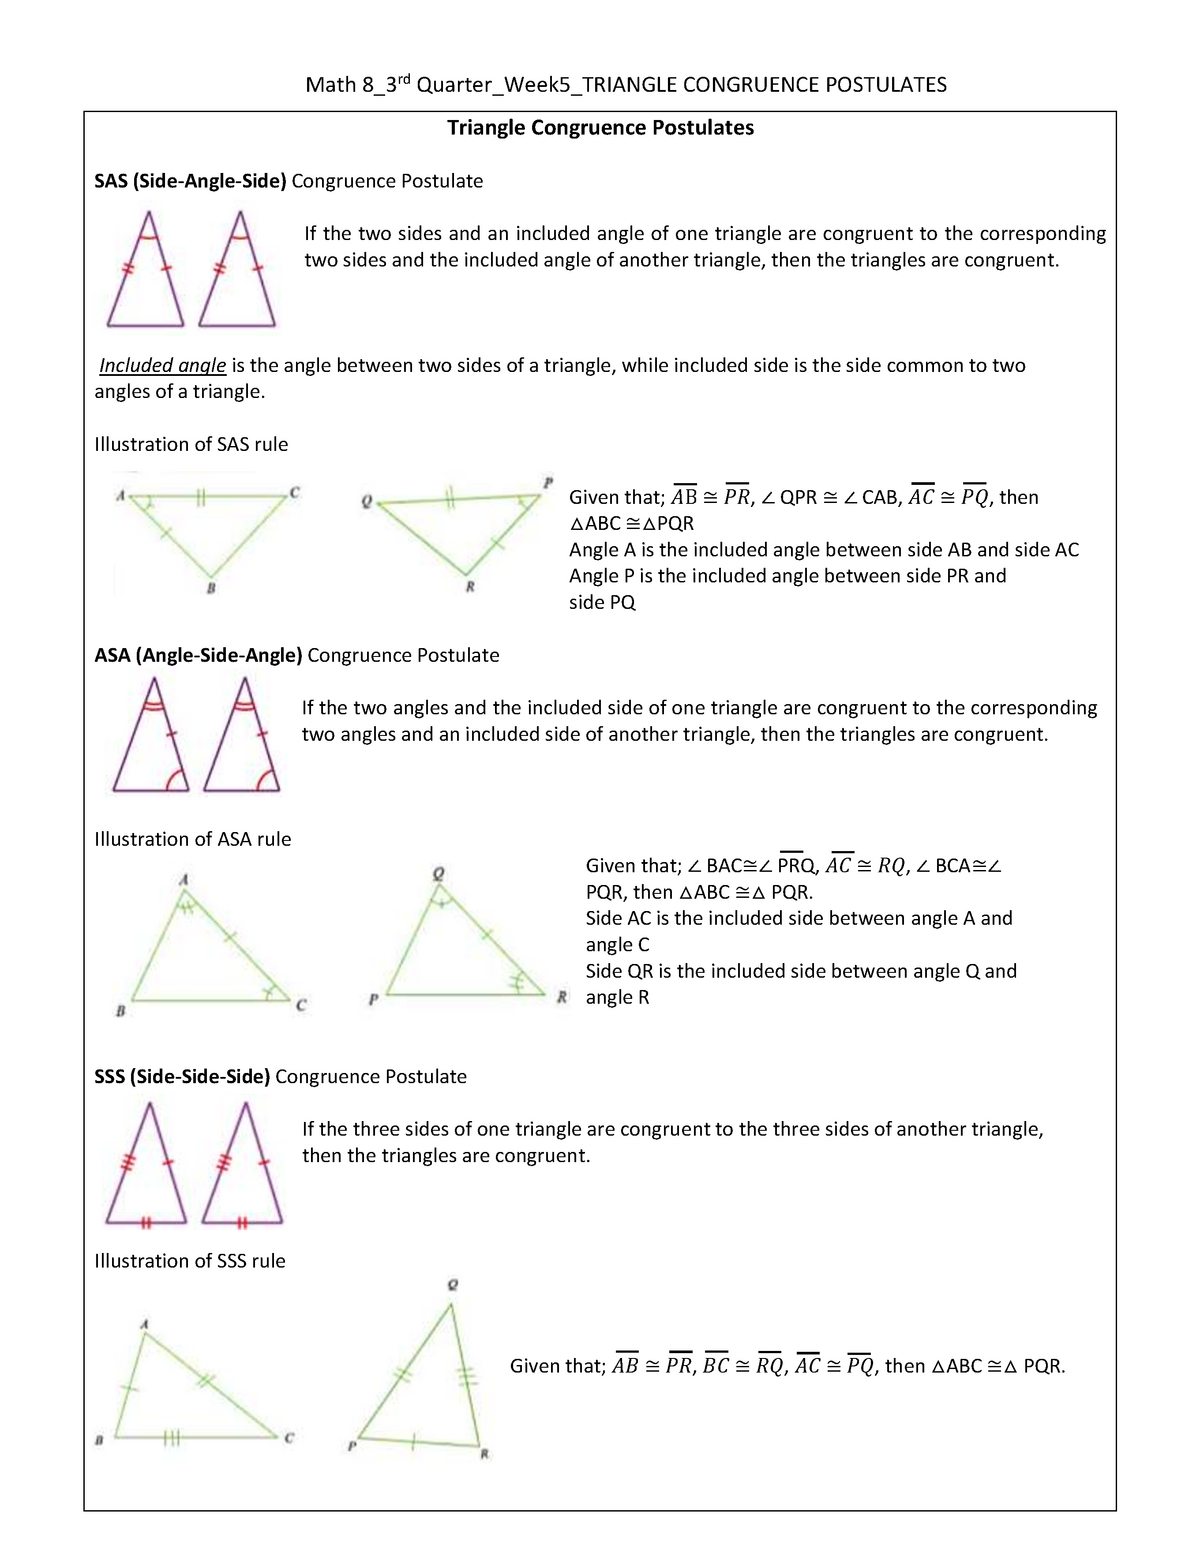 Triangle Congruence Postulates Math 8 3rd Quarter Week5 Triangle Congruence Postulates Triangle Studocu